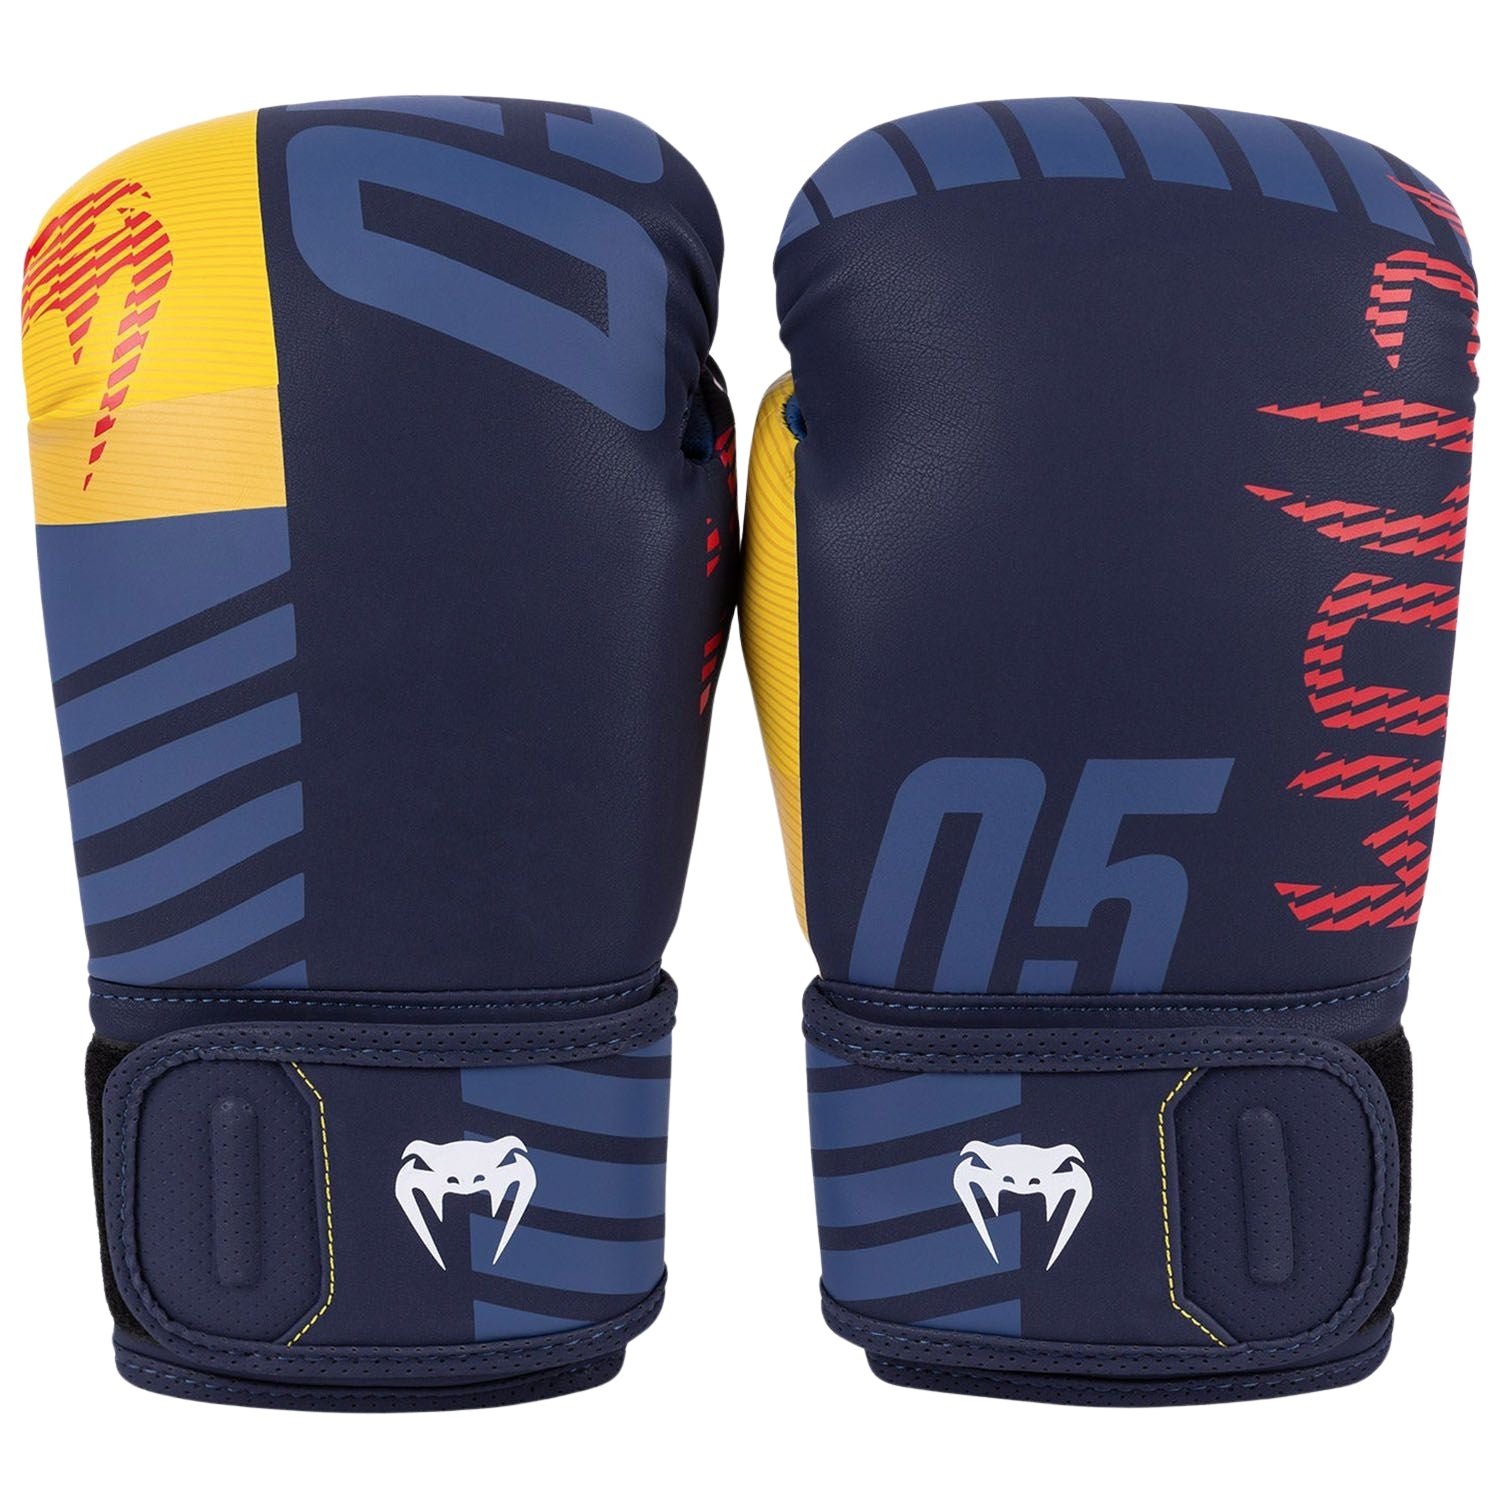 Venum Sports 88 Boxing Gloves, Blue/Yellow - Best Price online Prokicksports.com